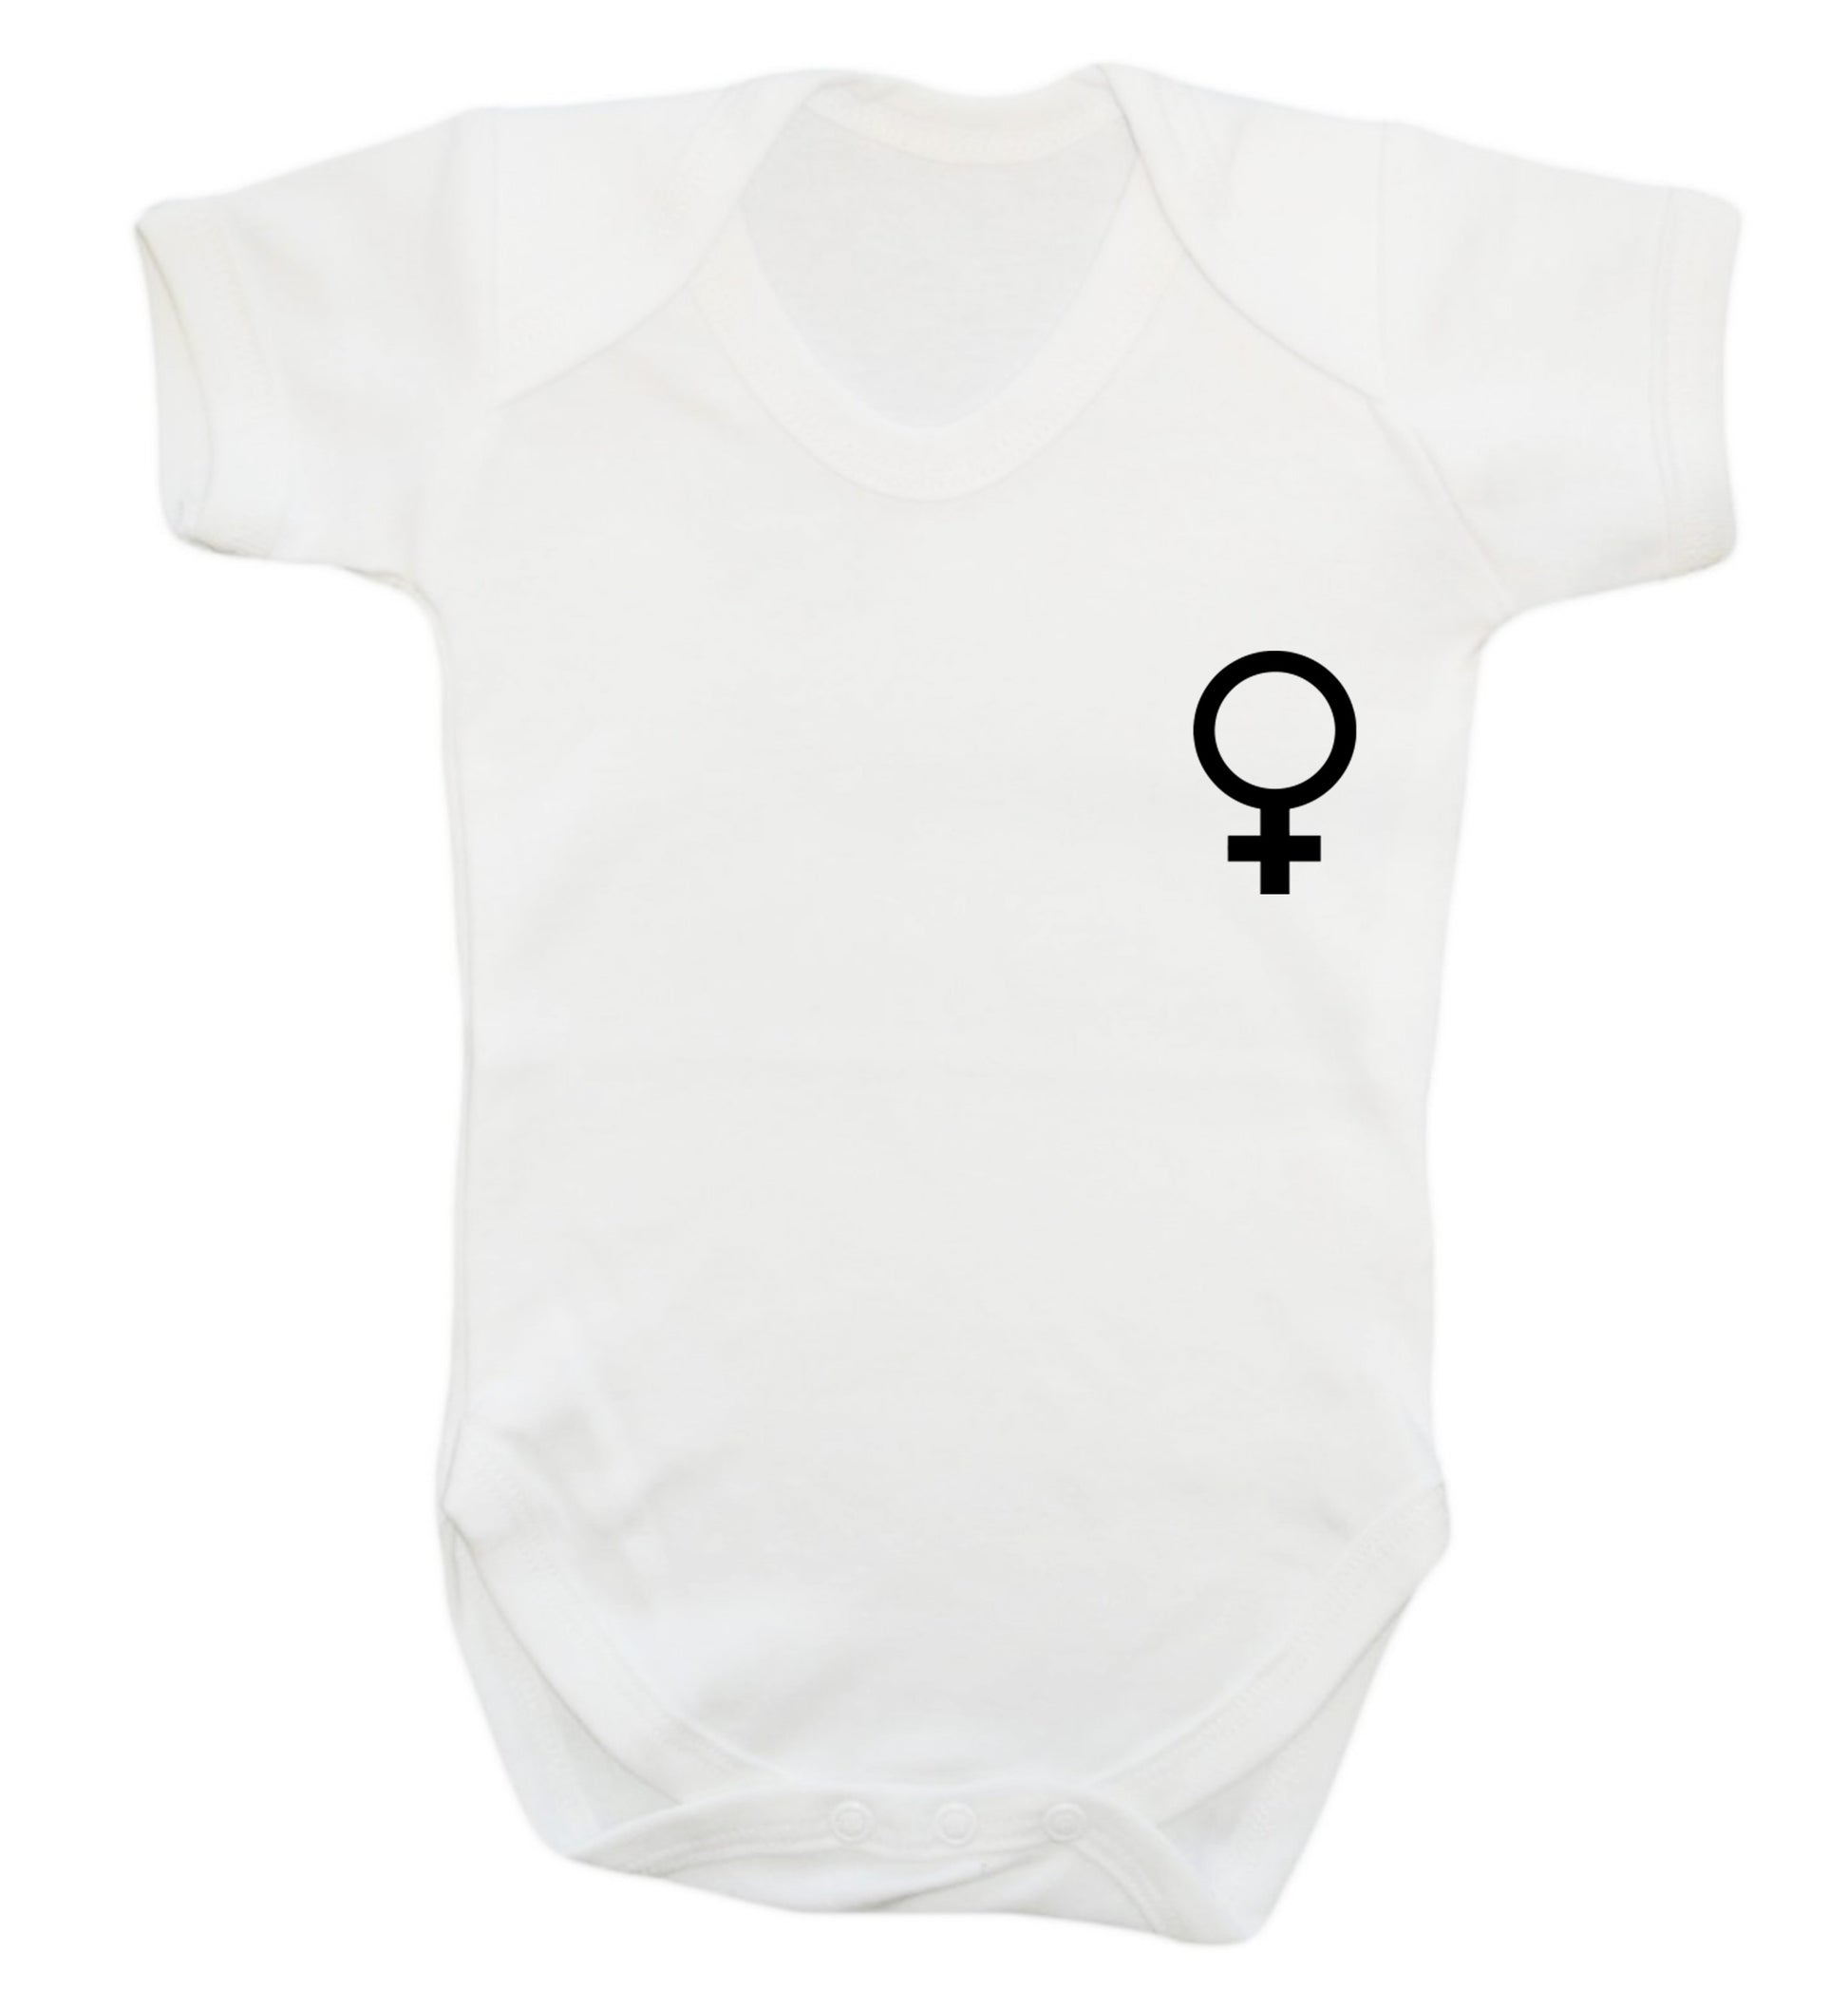 Female pocket symbol Baby Vest white 18-24 months